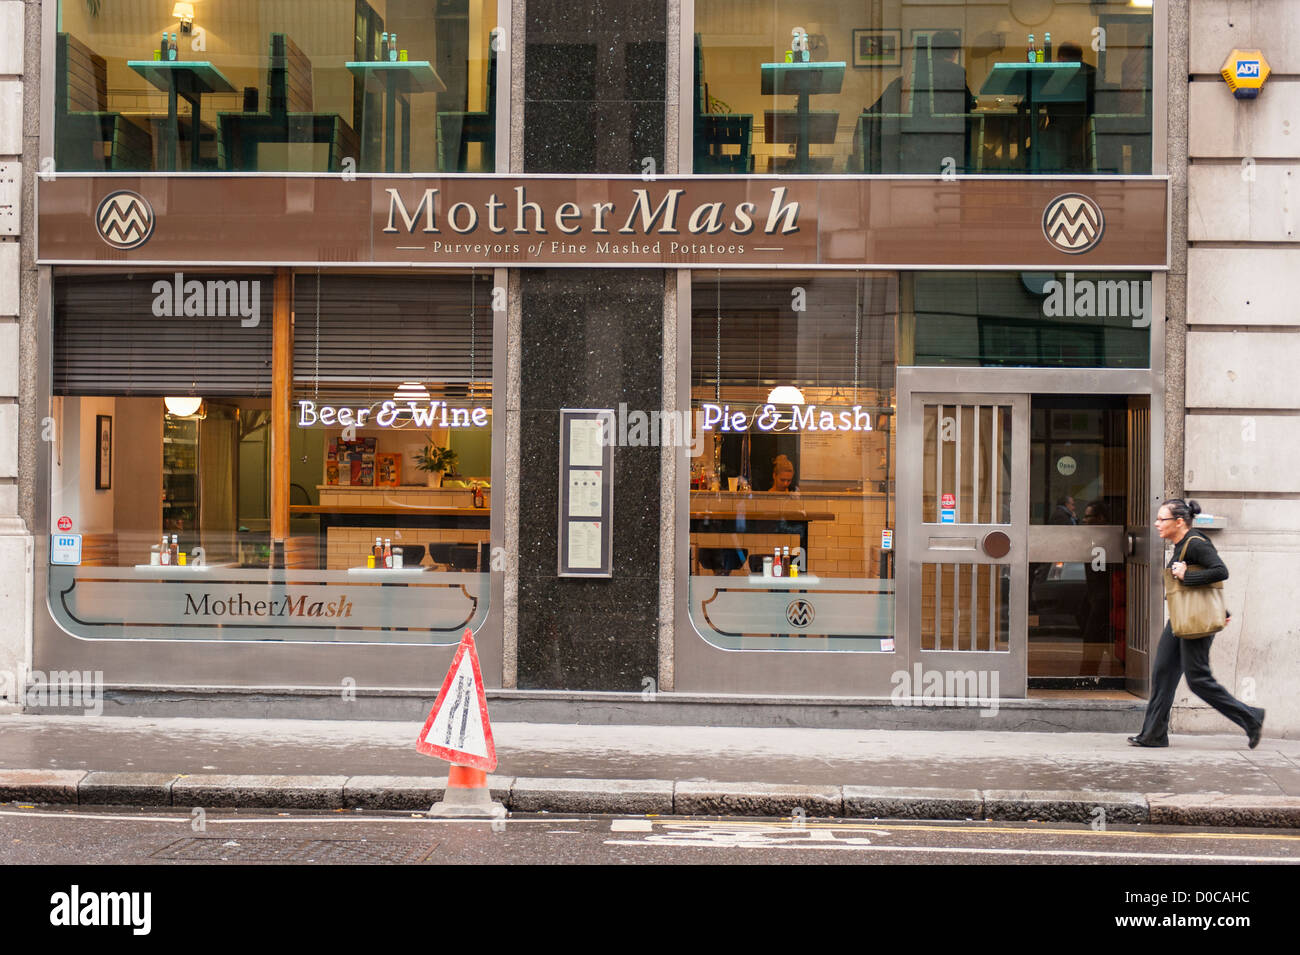 London City Mother Mash Pie & Mash Beer & Wine cafe restaurant bistro Purveyors of Fine Mashed Potatoes stylish fashionable facade frontage Stock Photo